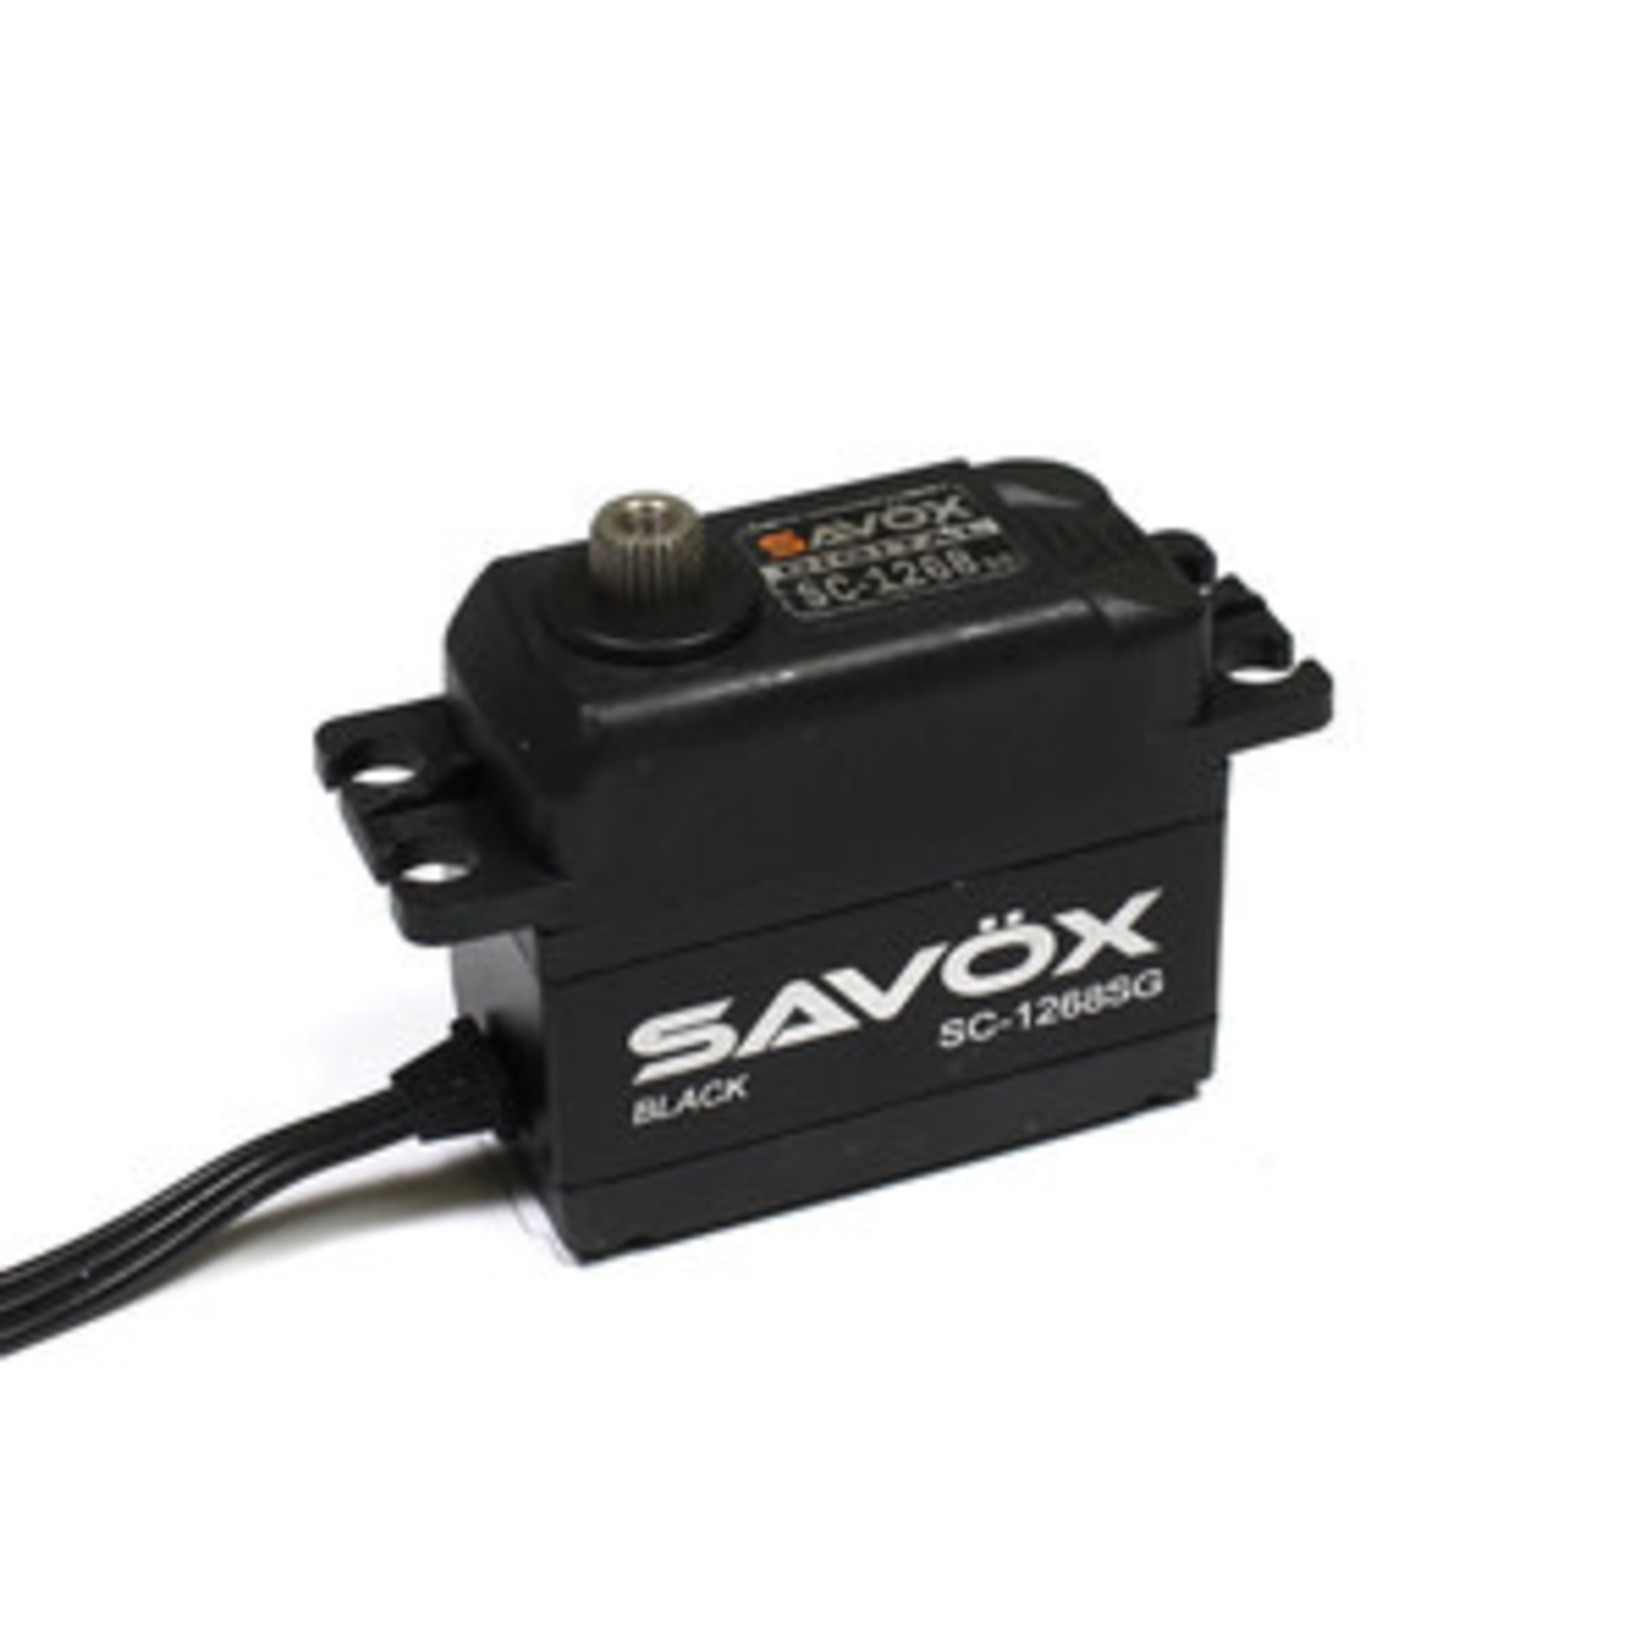 Savox Savox Black Edition High Torque Steel Gear Servo (High Voltage) (Black) #SC-1268SG